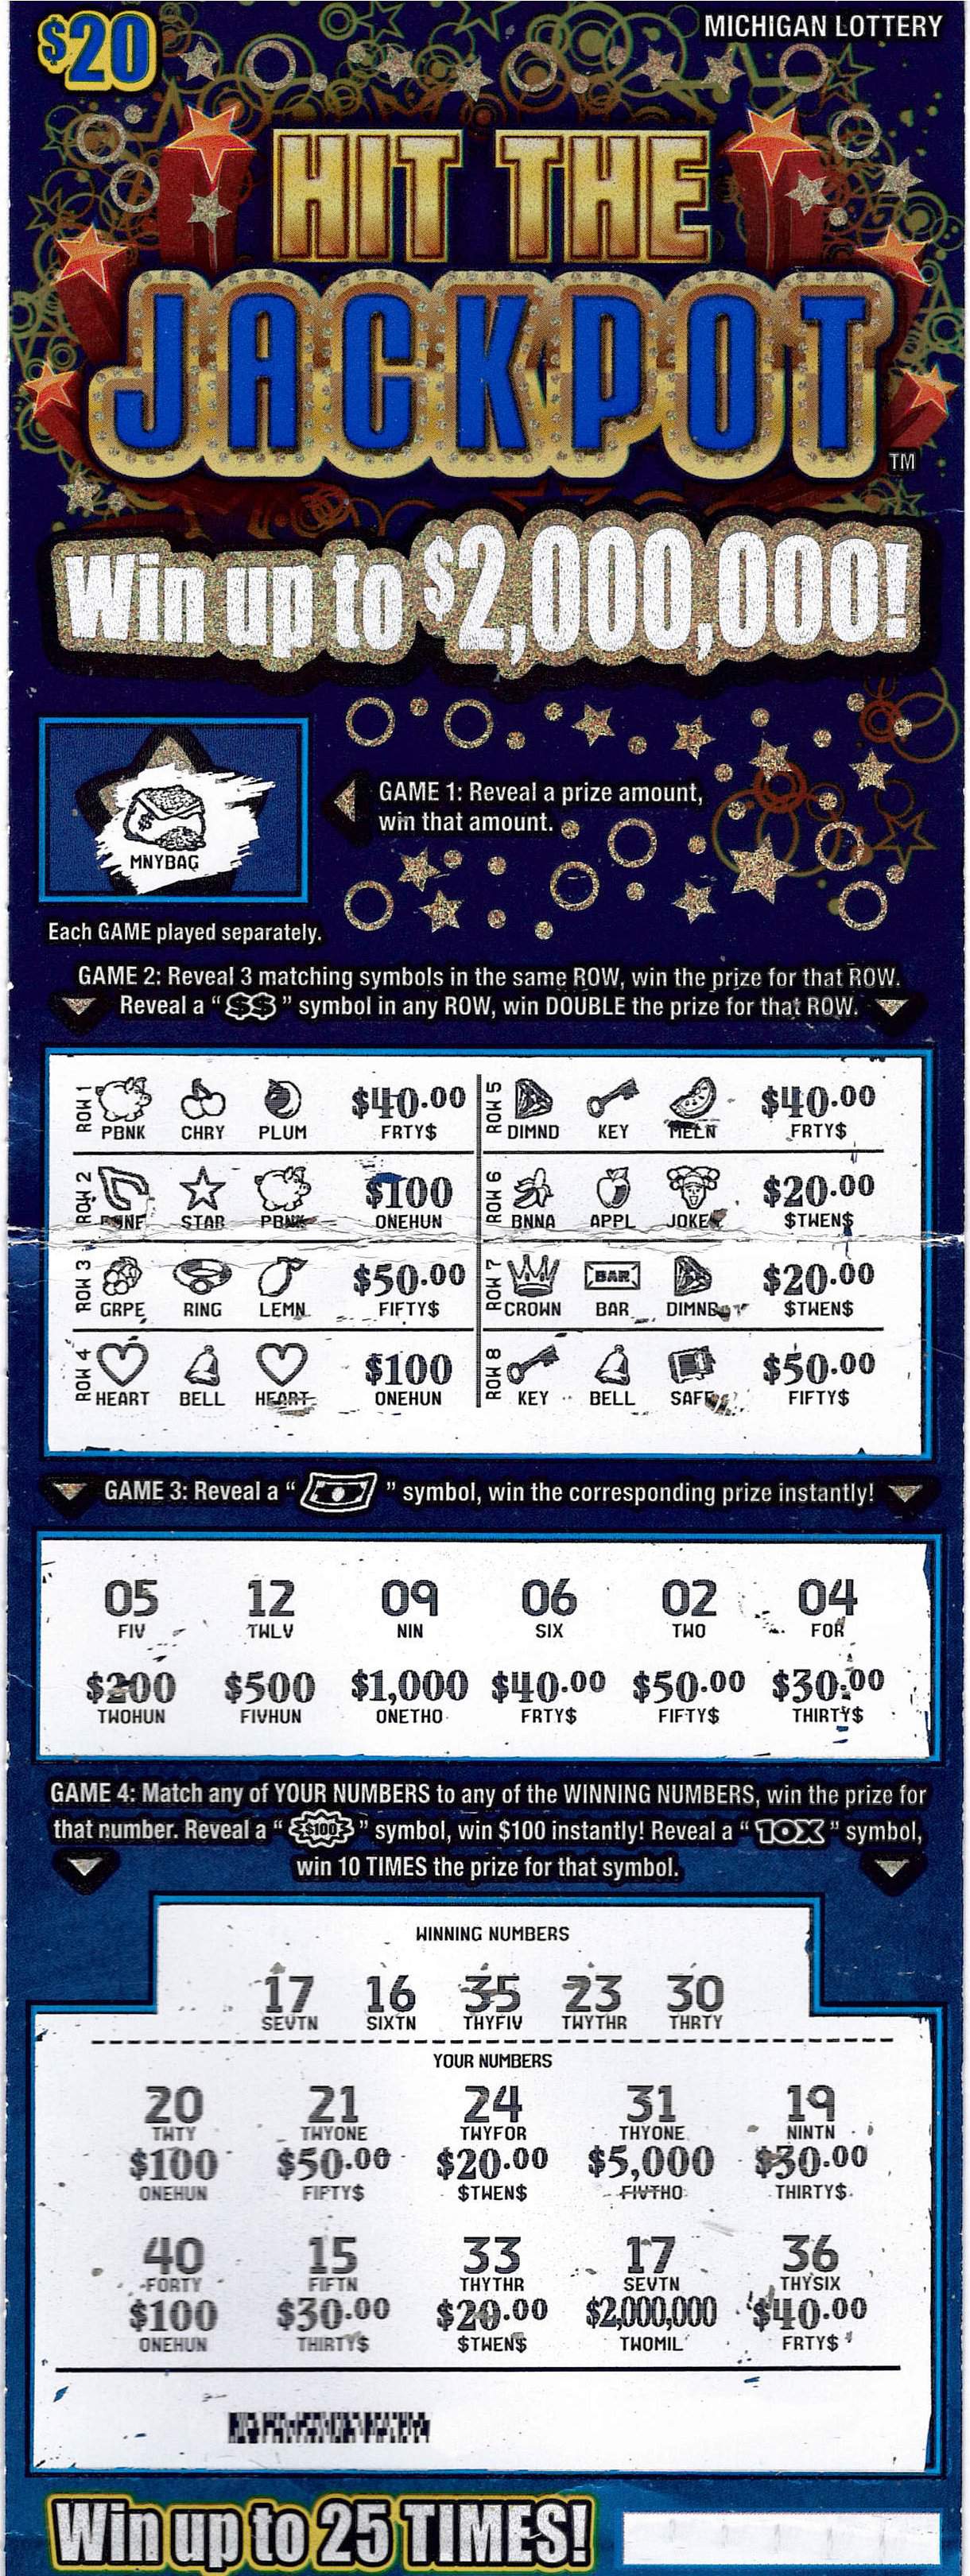 Michigan Lottery: Ypsilanti man wins $2M on ‘Jackpot’ scratch off ticket game